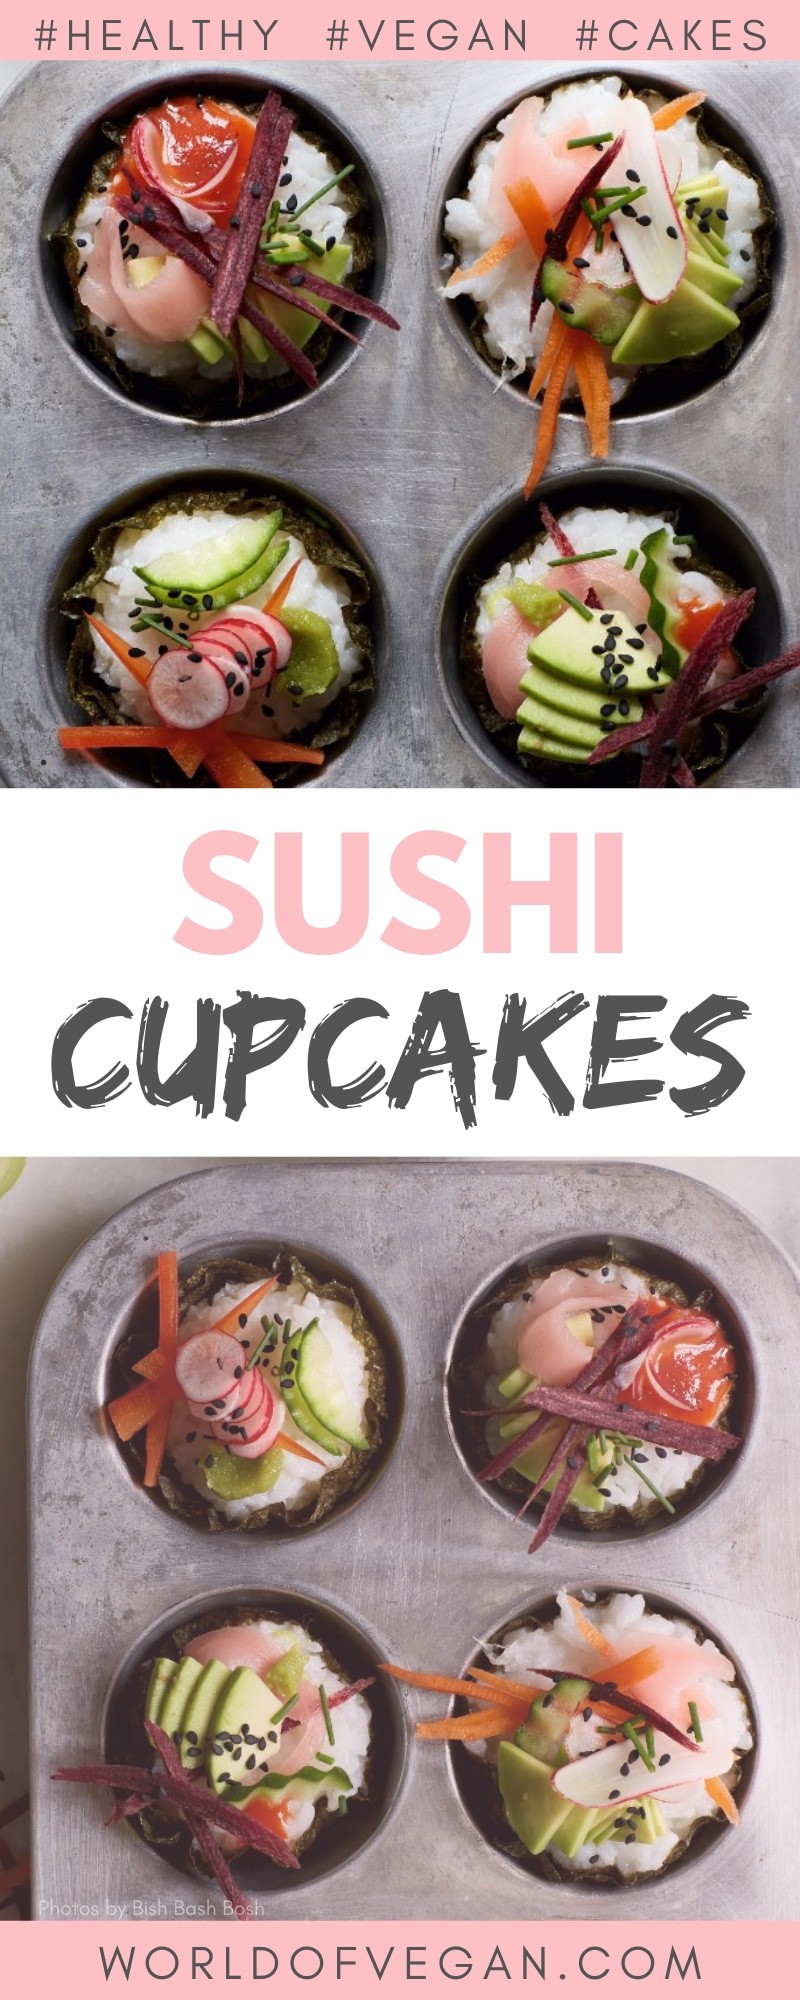 Easy Vegan Sushi Cupcakes | World of Vegan | #sushi #vegan #cupcakes #cakes #worldofvegan #appetizer #party